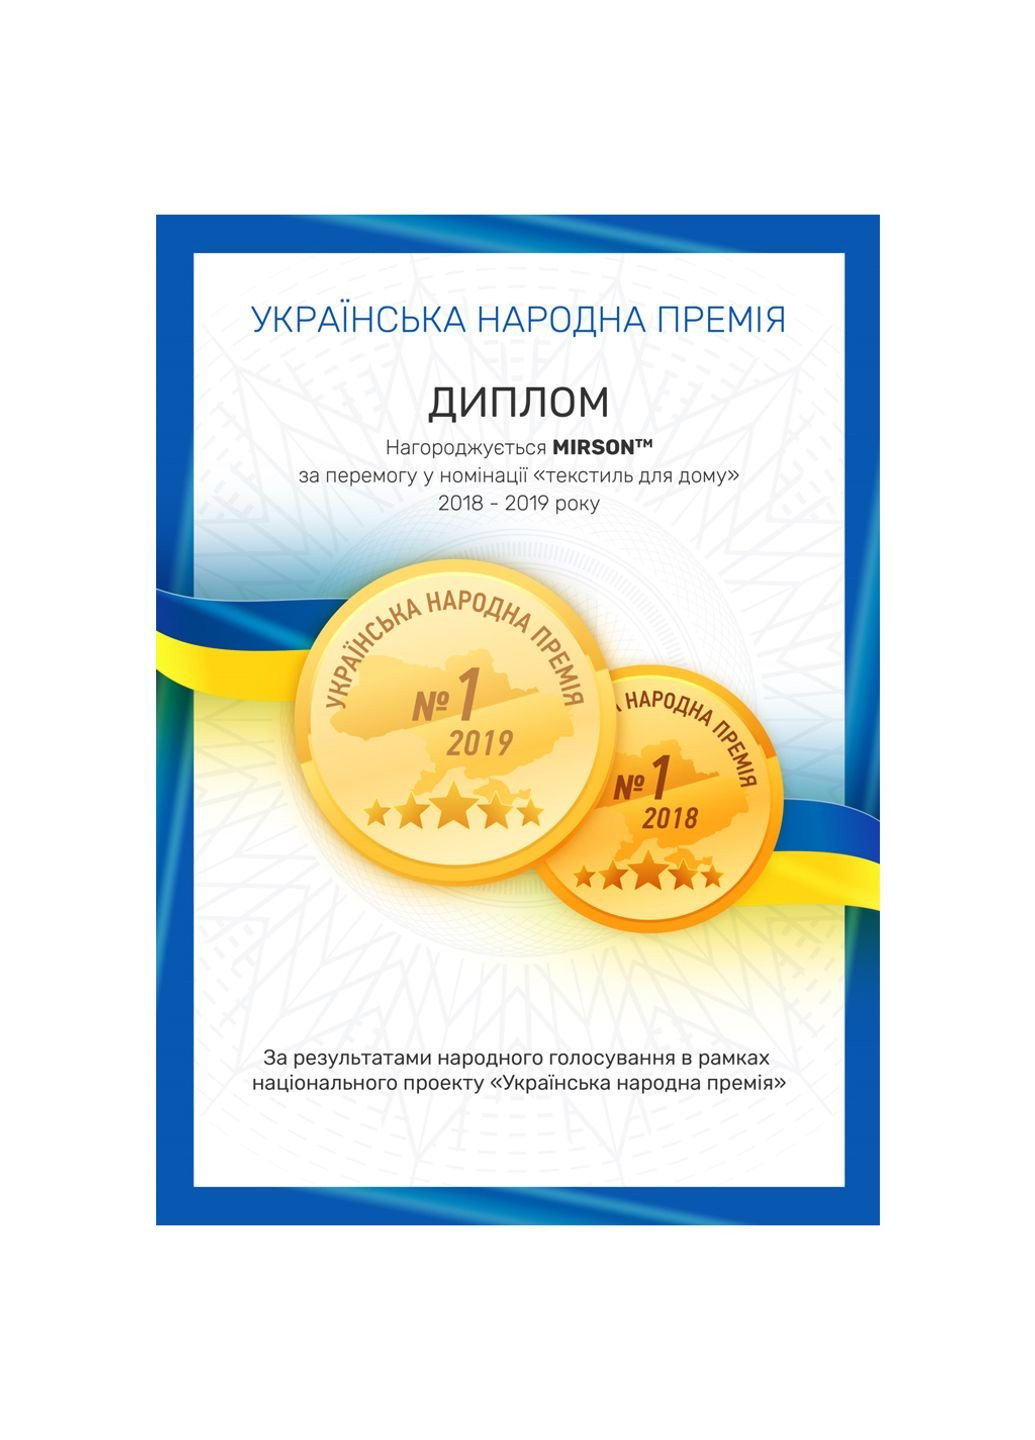 No Brand полотенце mirson набор банный №5002 softness cornflower 50x90, 70x140 (2200003182941) голубой производство - Украина